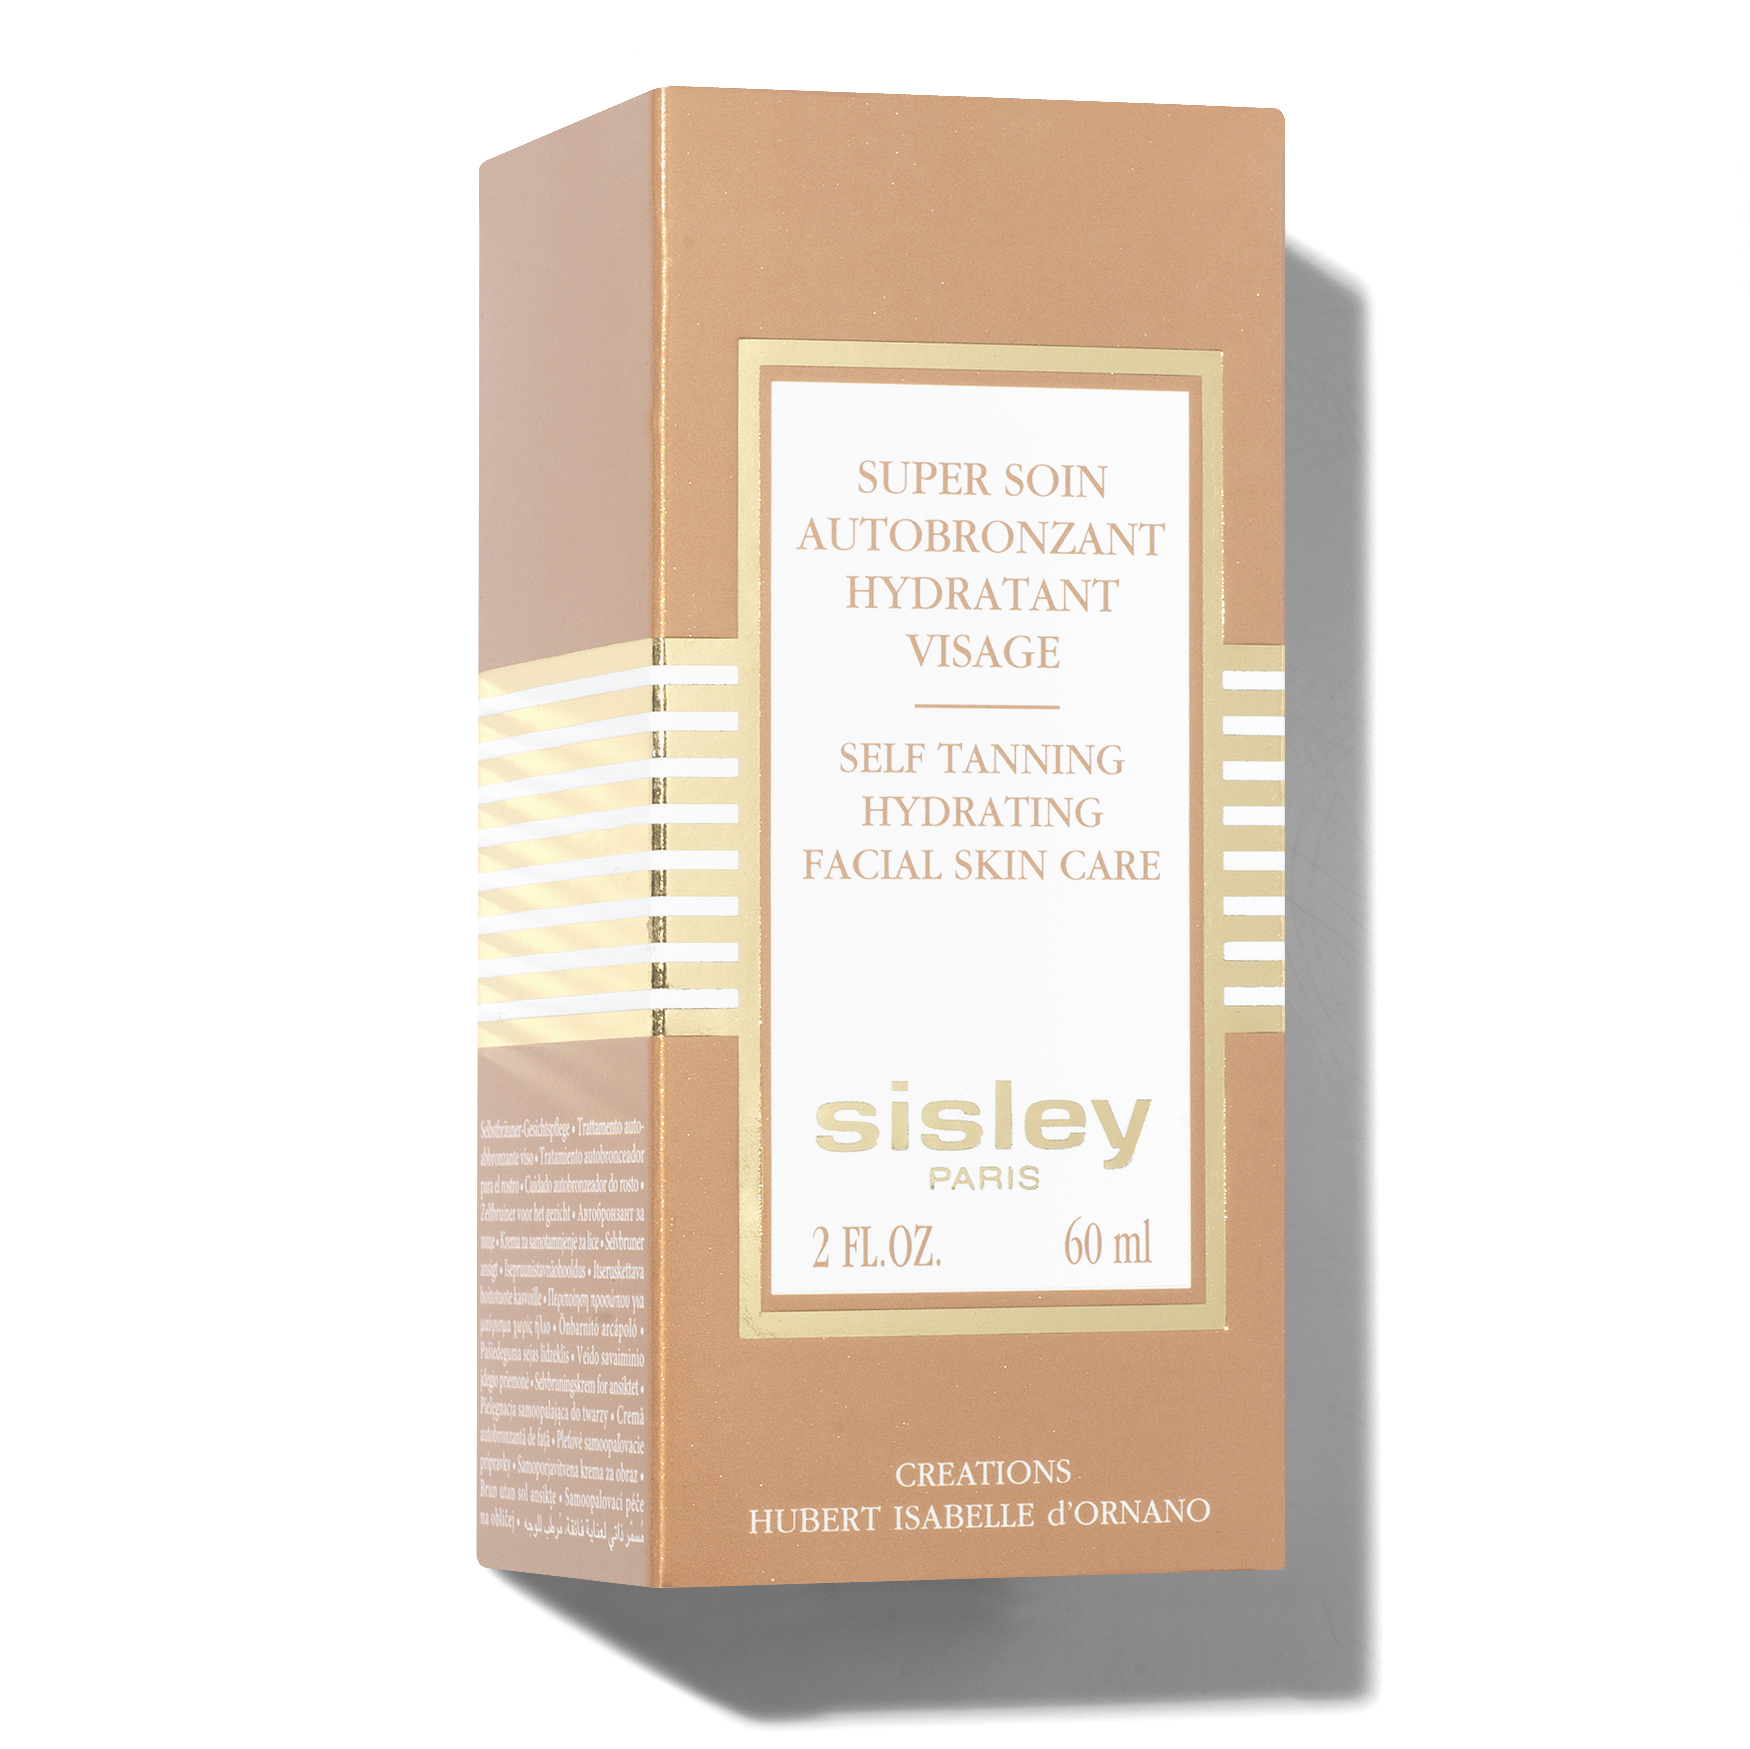 Sisley-Paris Soin visage hydratant autobronzant | Space NK